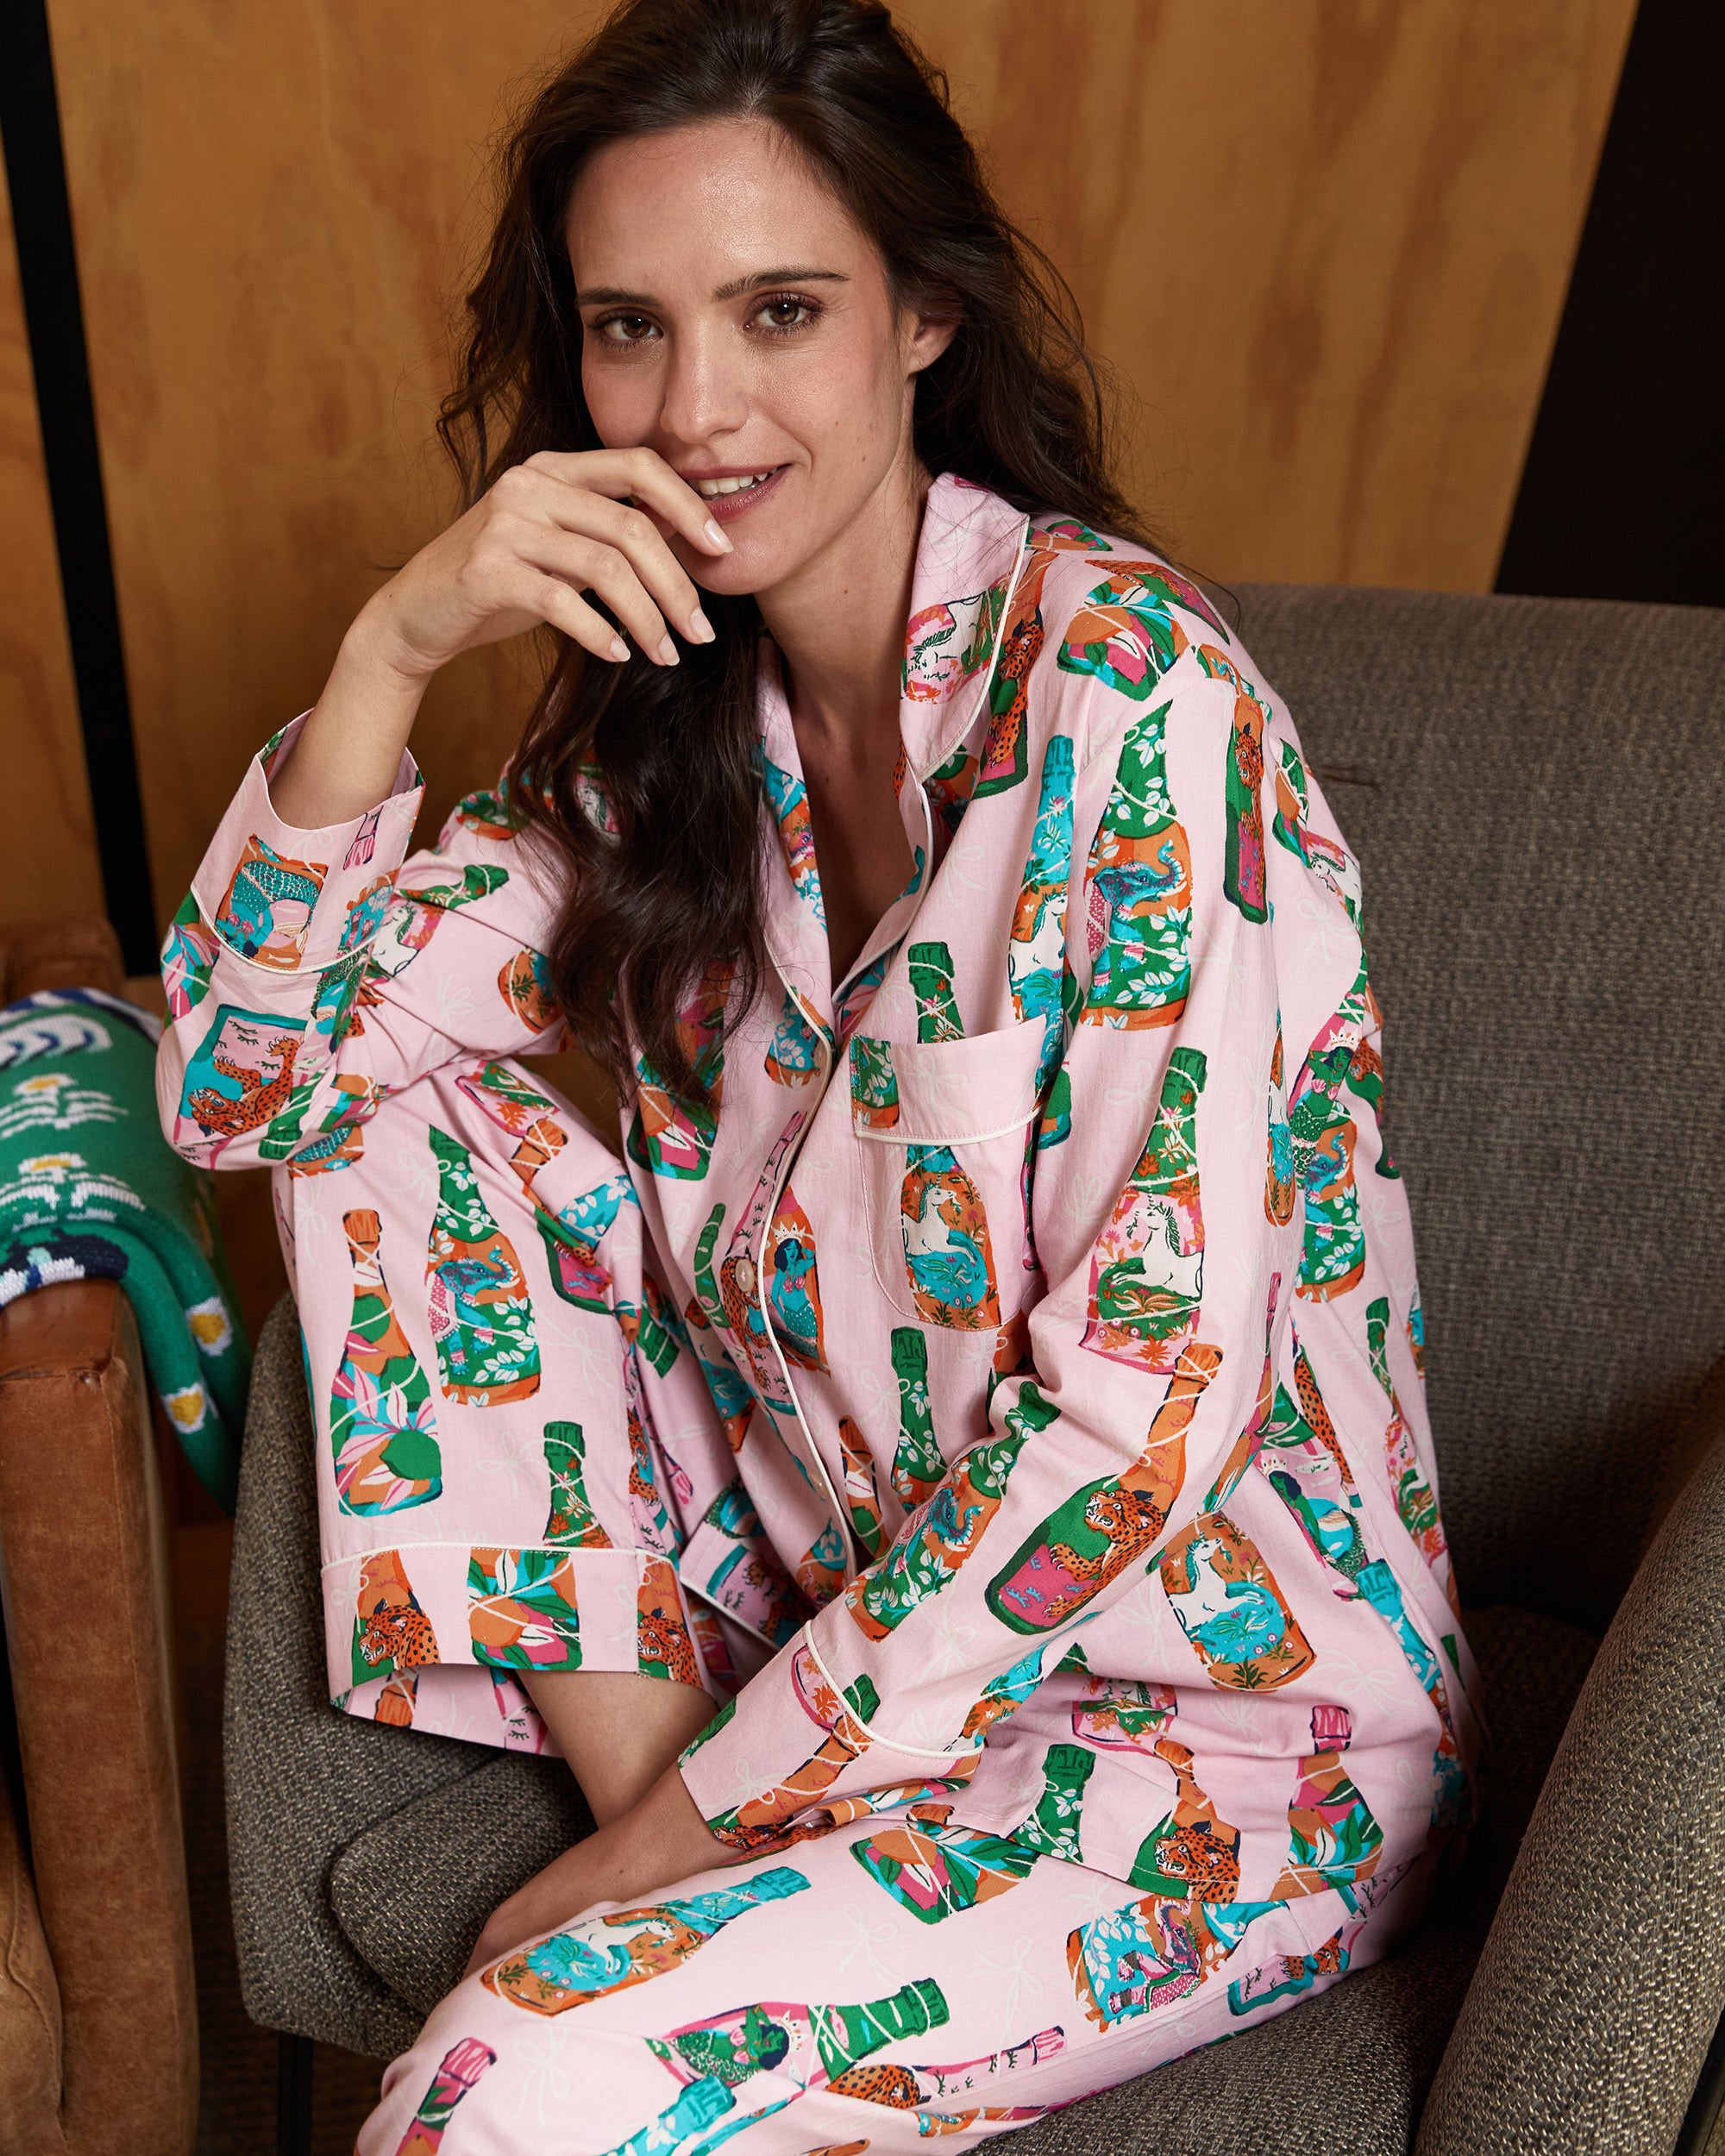 New LUCKY BRAND Ladies 3 Piece Pajama Set Includes SS Shirt, Pants